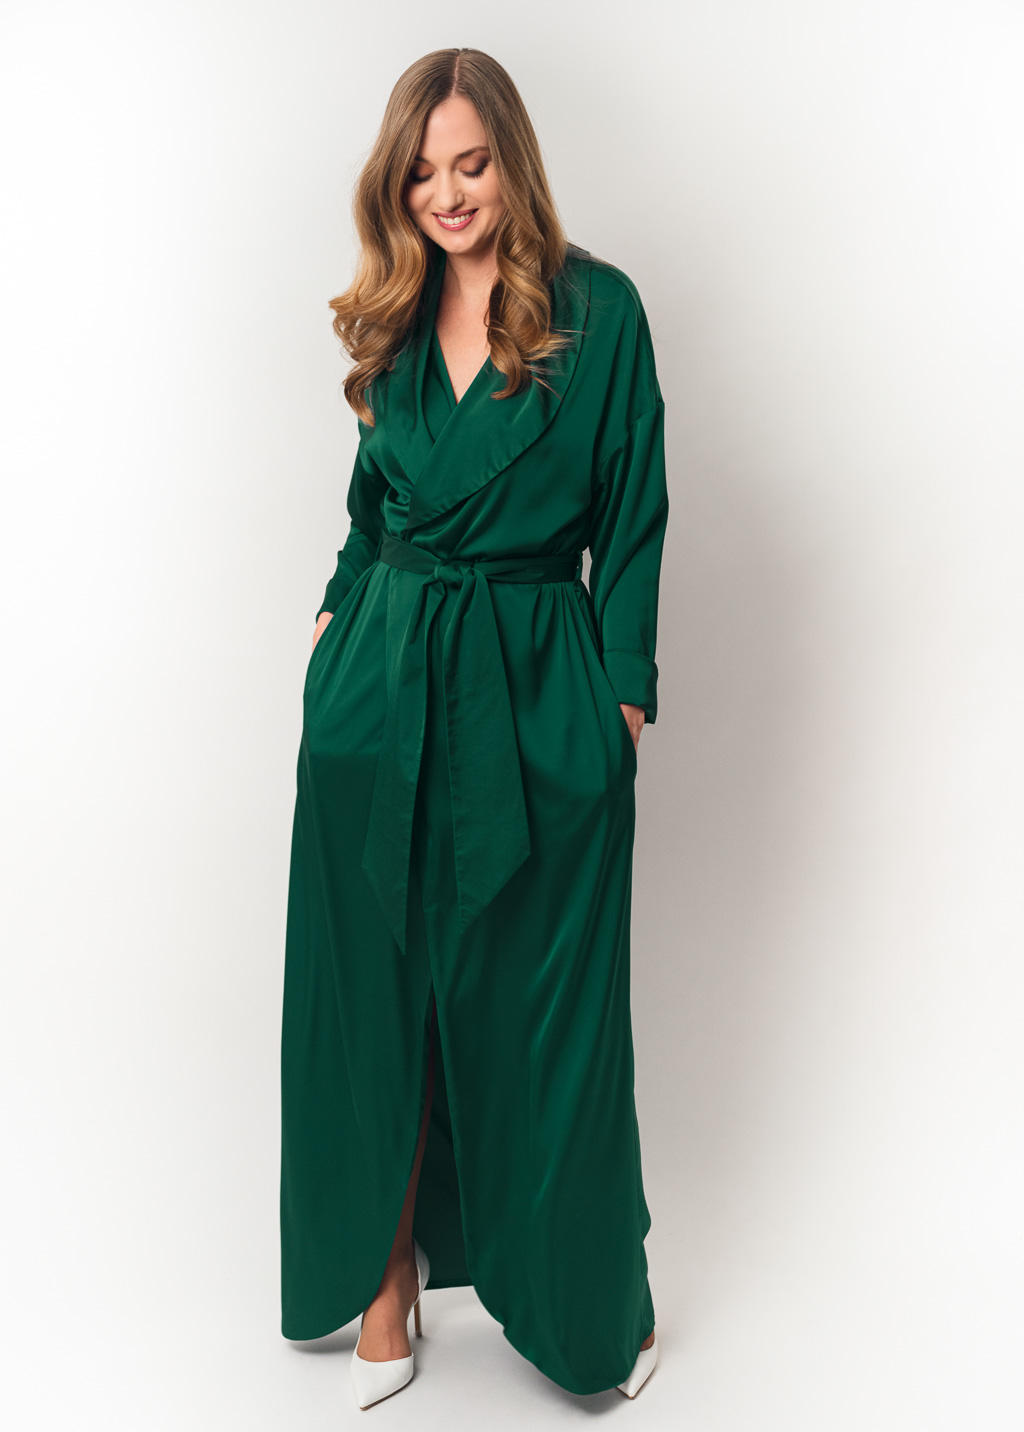 Emerald green long silk robe with pockets